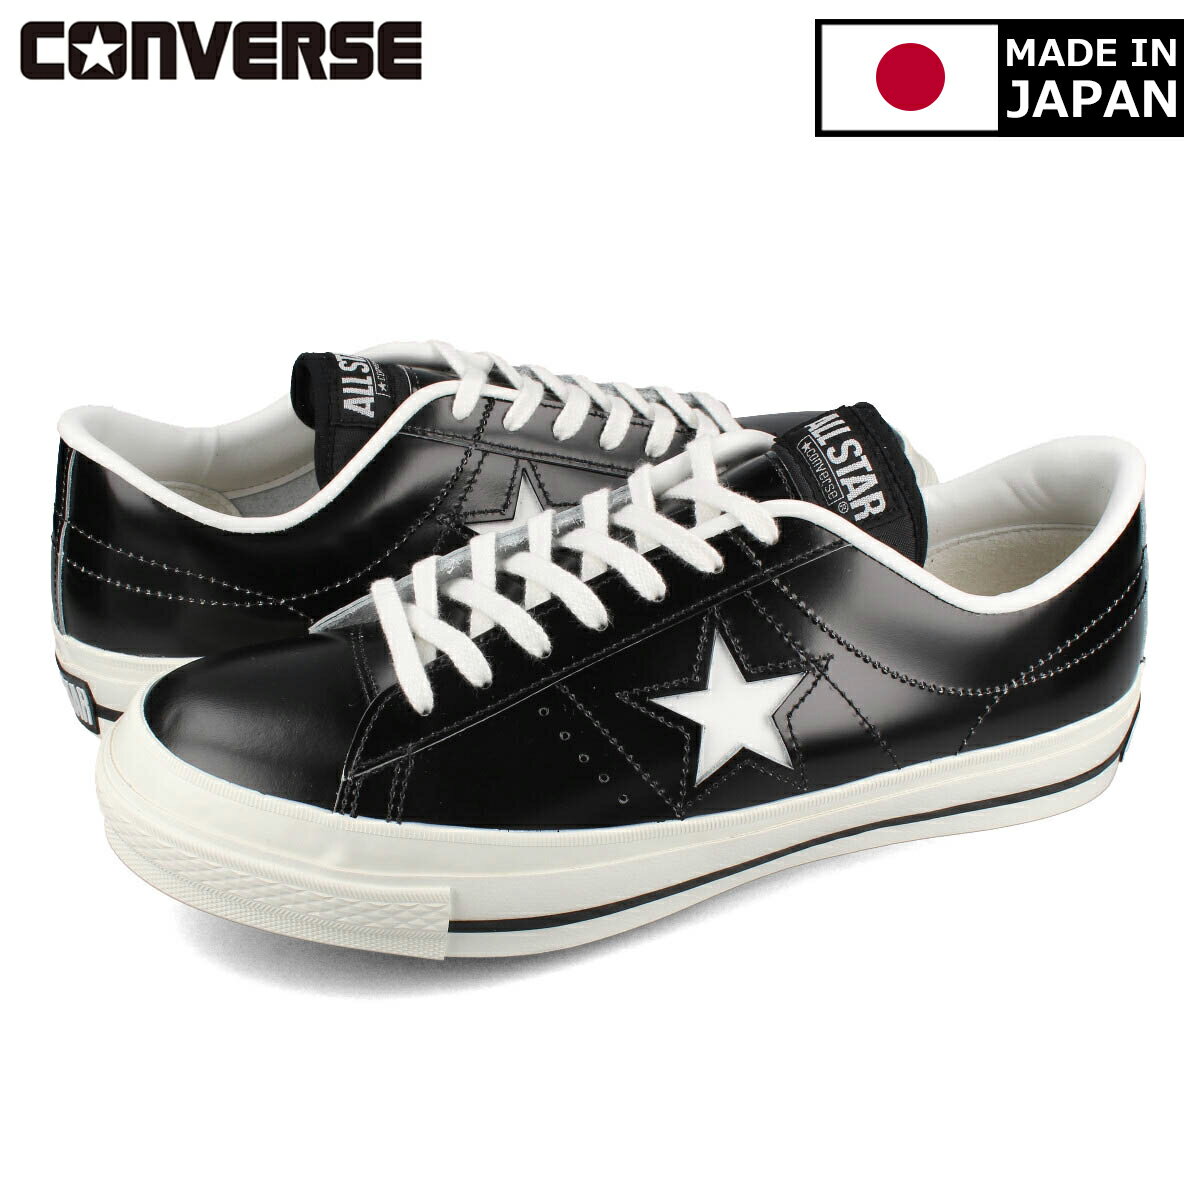 CONVERSE ONE STAR J 【MADE IN JAPAN】【日本製】【メンズ】【レディース】コンバース ワンスター J BLACK/WHITE